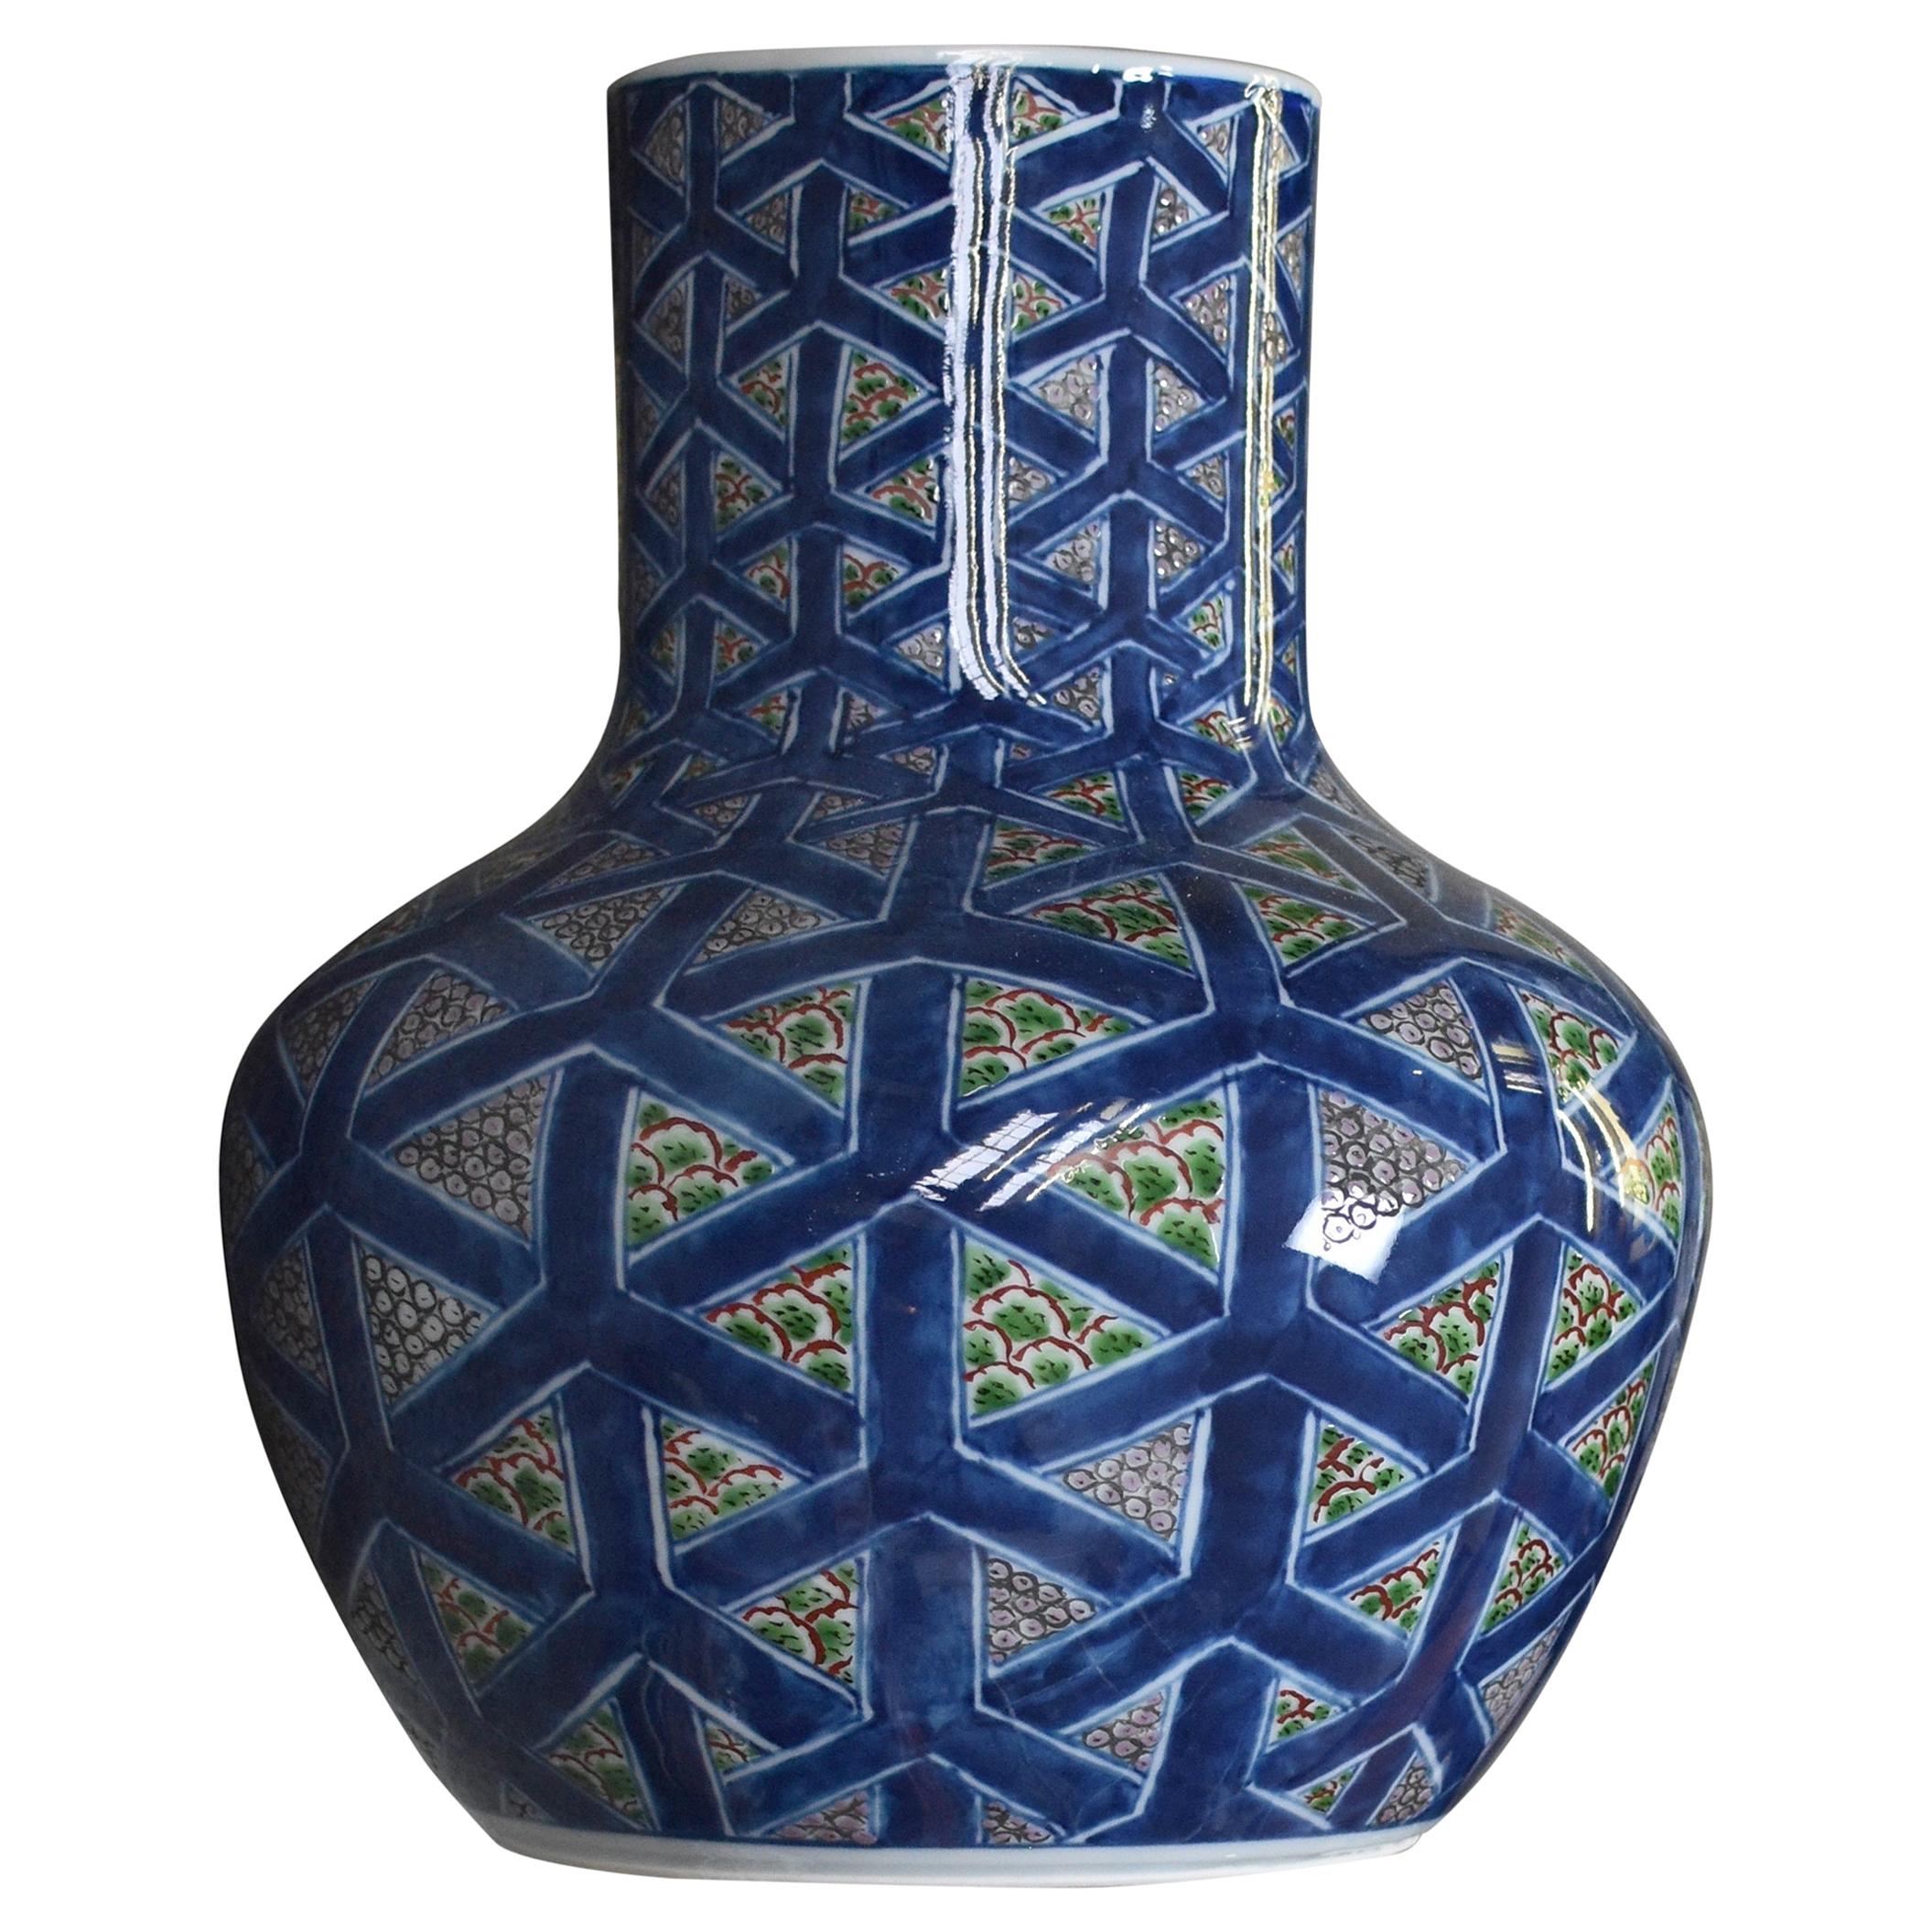 Japanese Contemporary Blue Green Porcelain Vase by Master Artist, 3